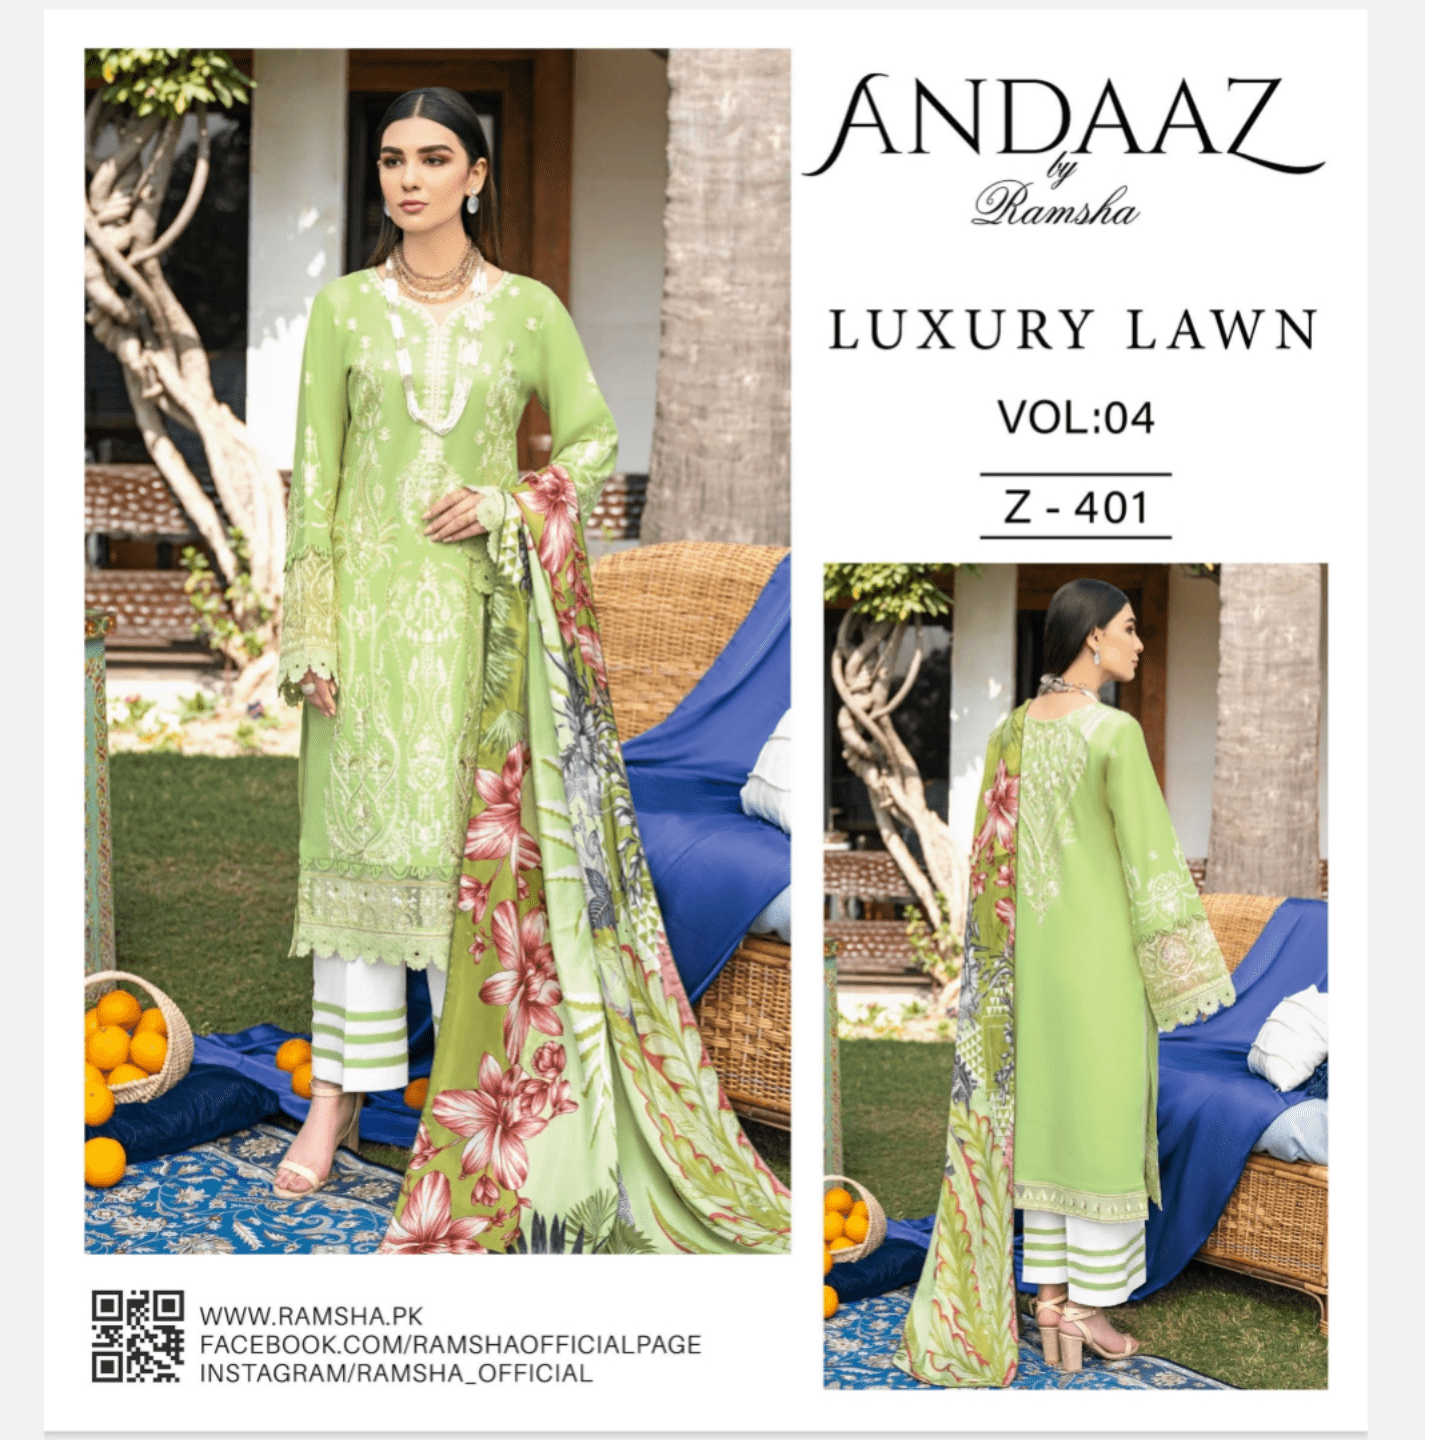 Ramsha Andaaz luxury Lawn  Vol 04 23